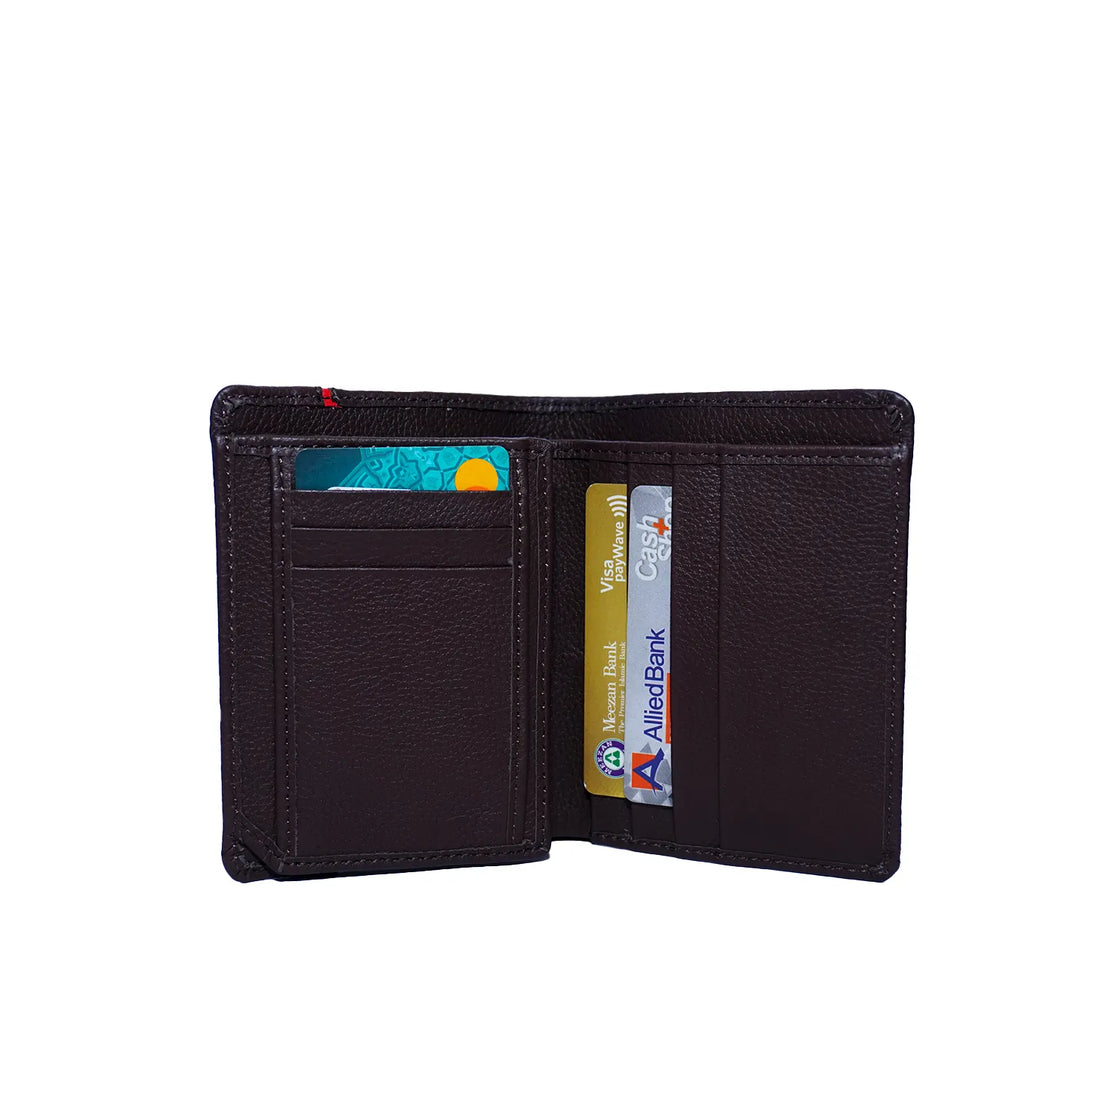 Verax Dark Brown Leather Wallet